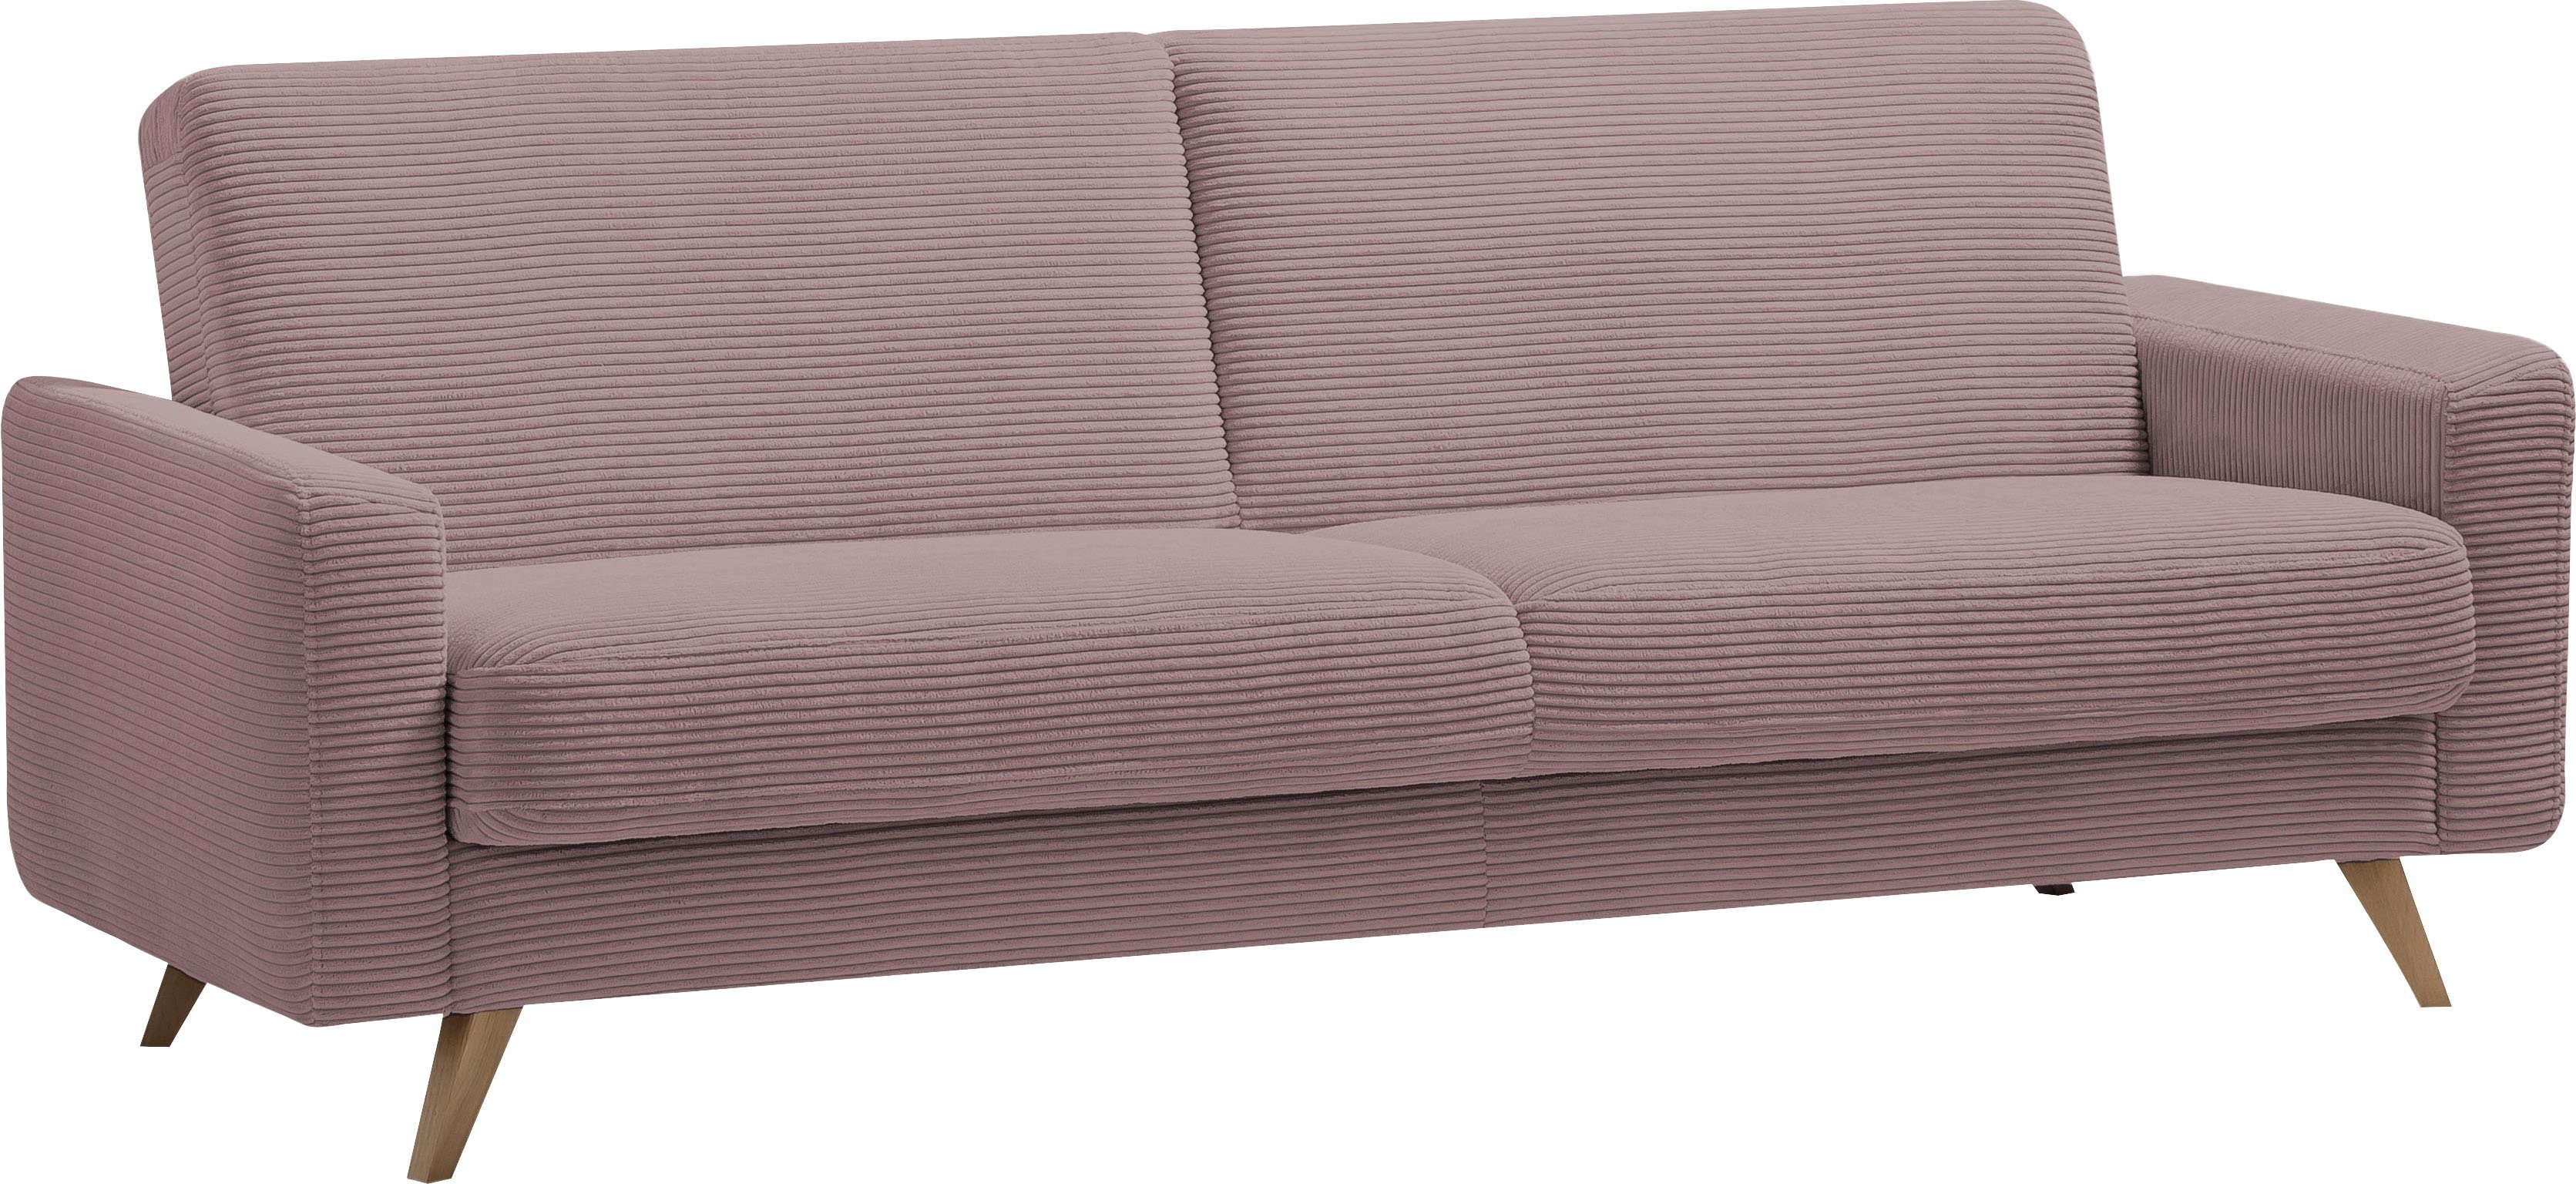 exxpo - sofa fashion 3-Sitzer Inklusive Bettfunktion rose Samso, old Bettkasten und